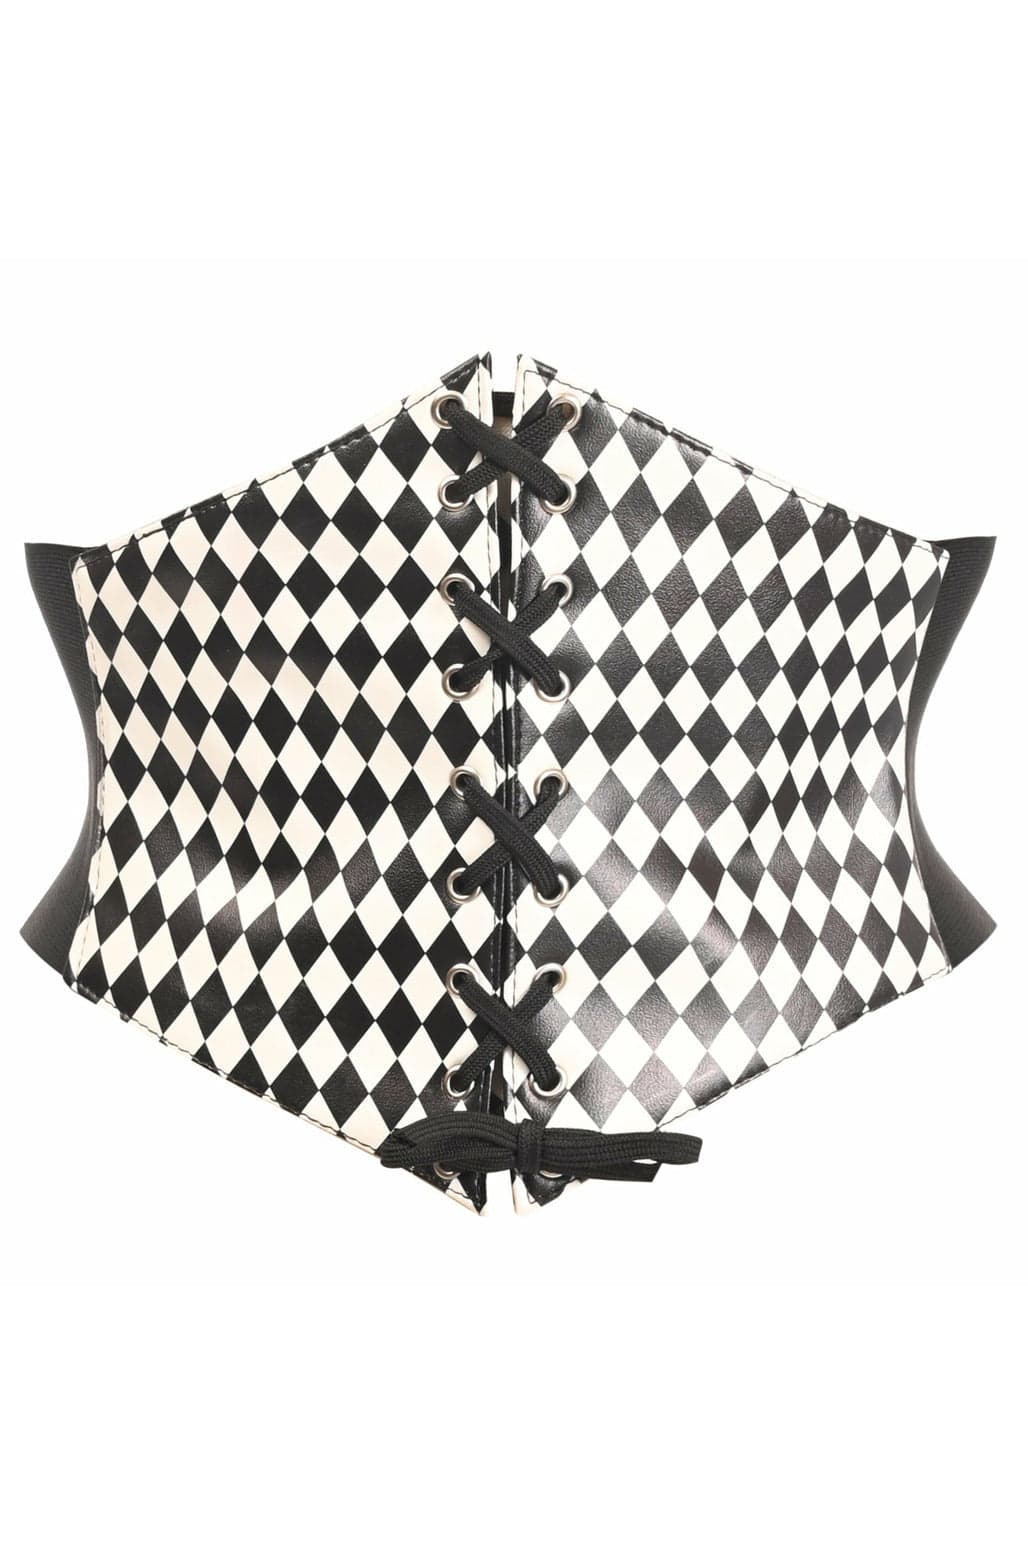 Sexy Black with White Diamond Lace-Up Corset Belt Cincher Musotica.com